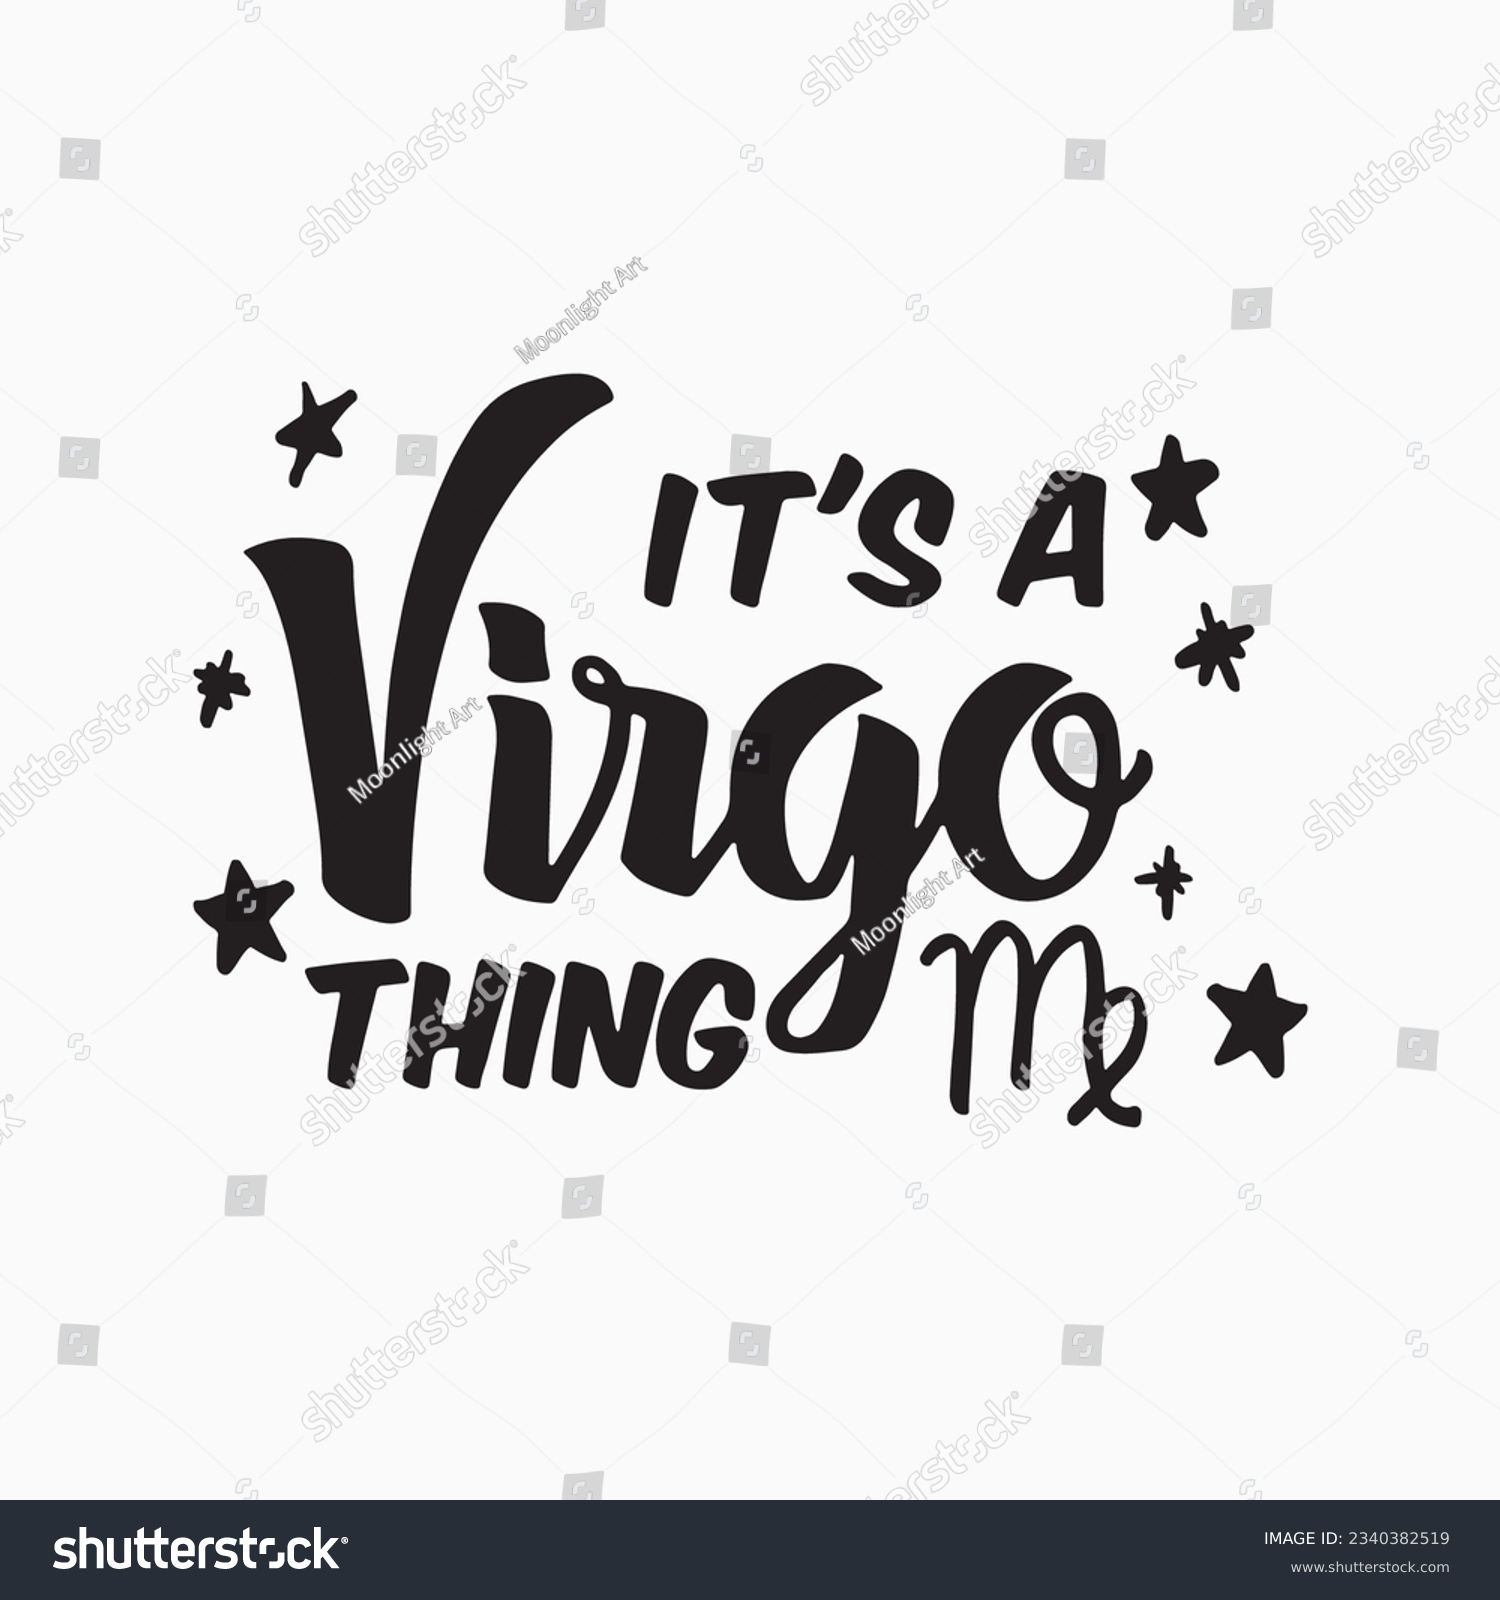 SVG of Virgo Svg, Its A Virgo Thing Svg, Zodiac Sign Svg, Astrology Signs, Zodiac Symbols, Constellation Signs, Astrology, Cut File Cricut, Svg Files for Cricut svg